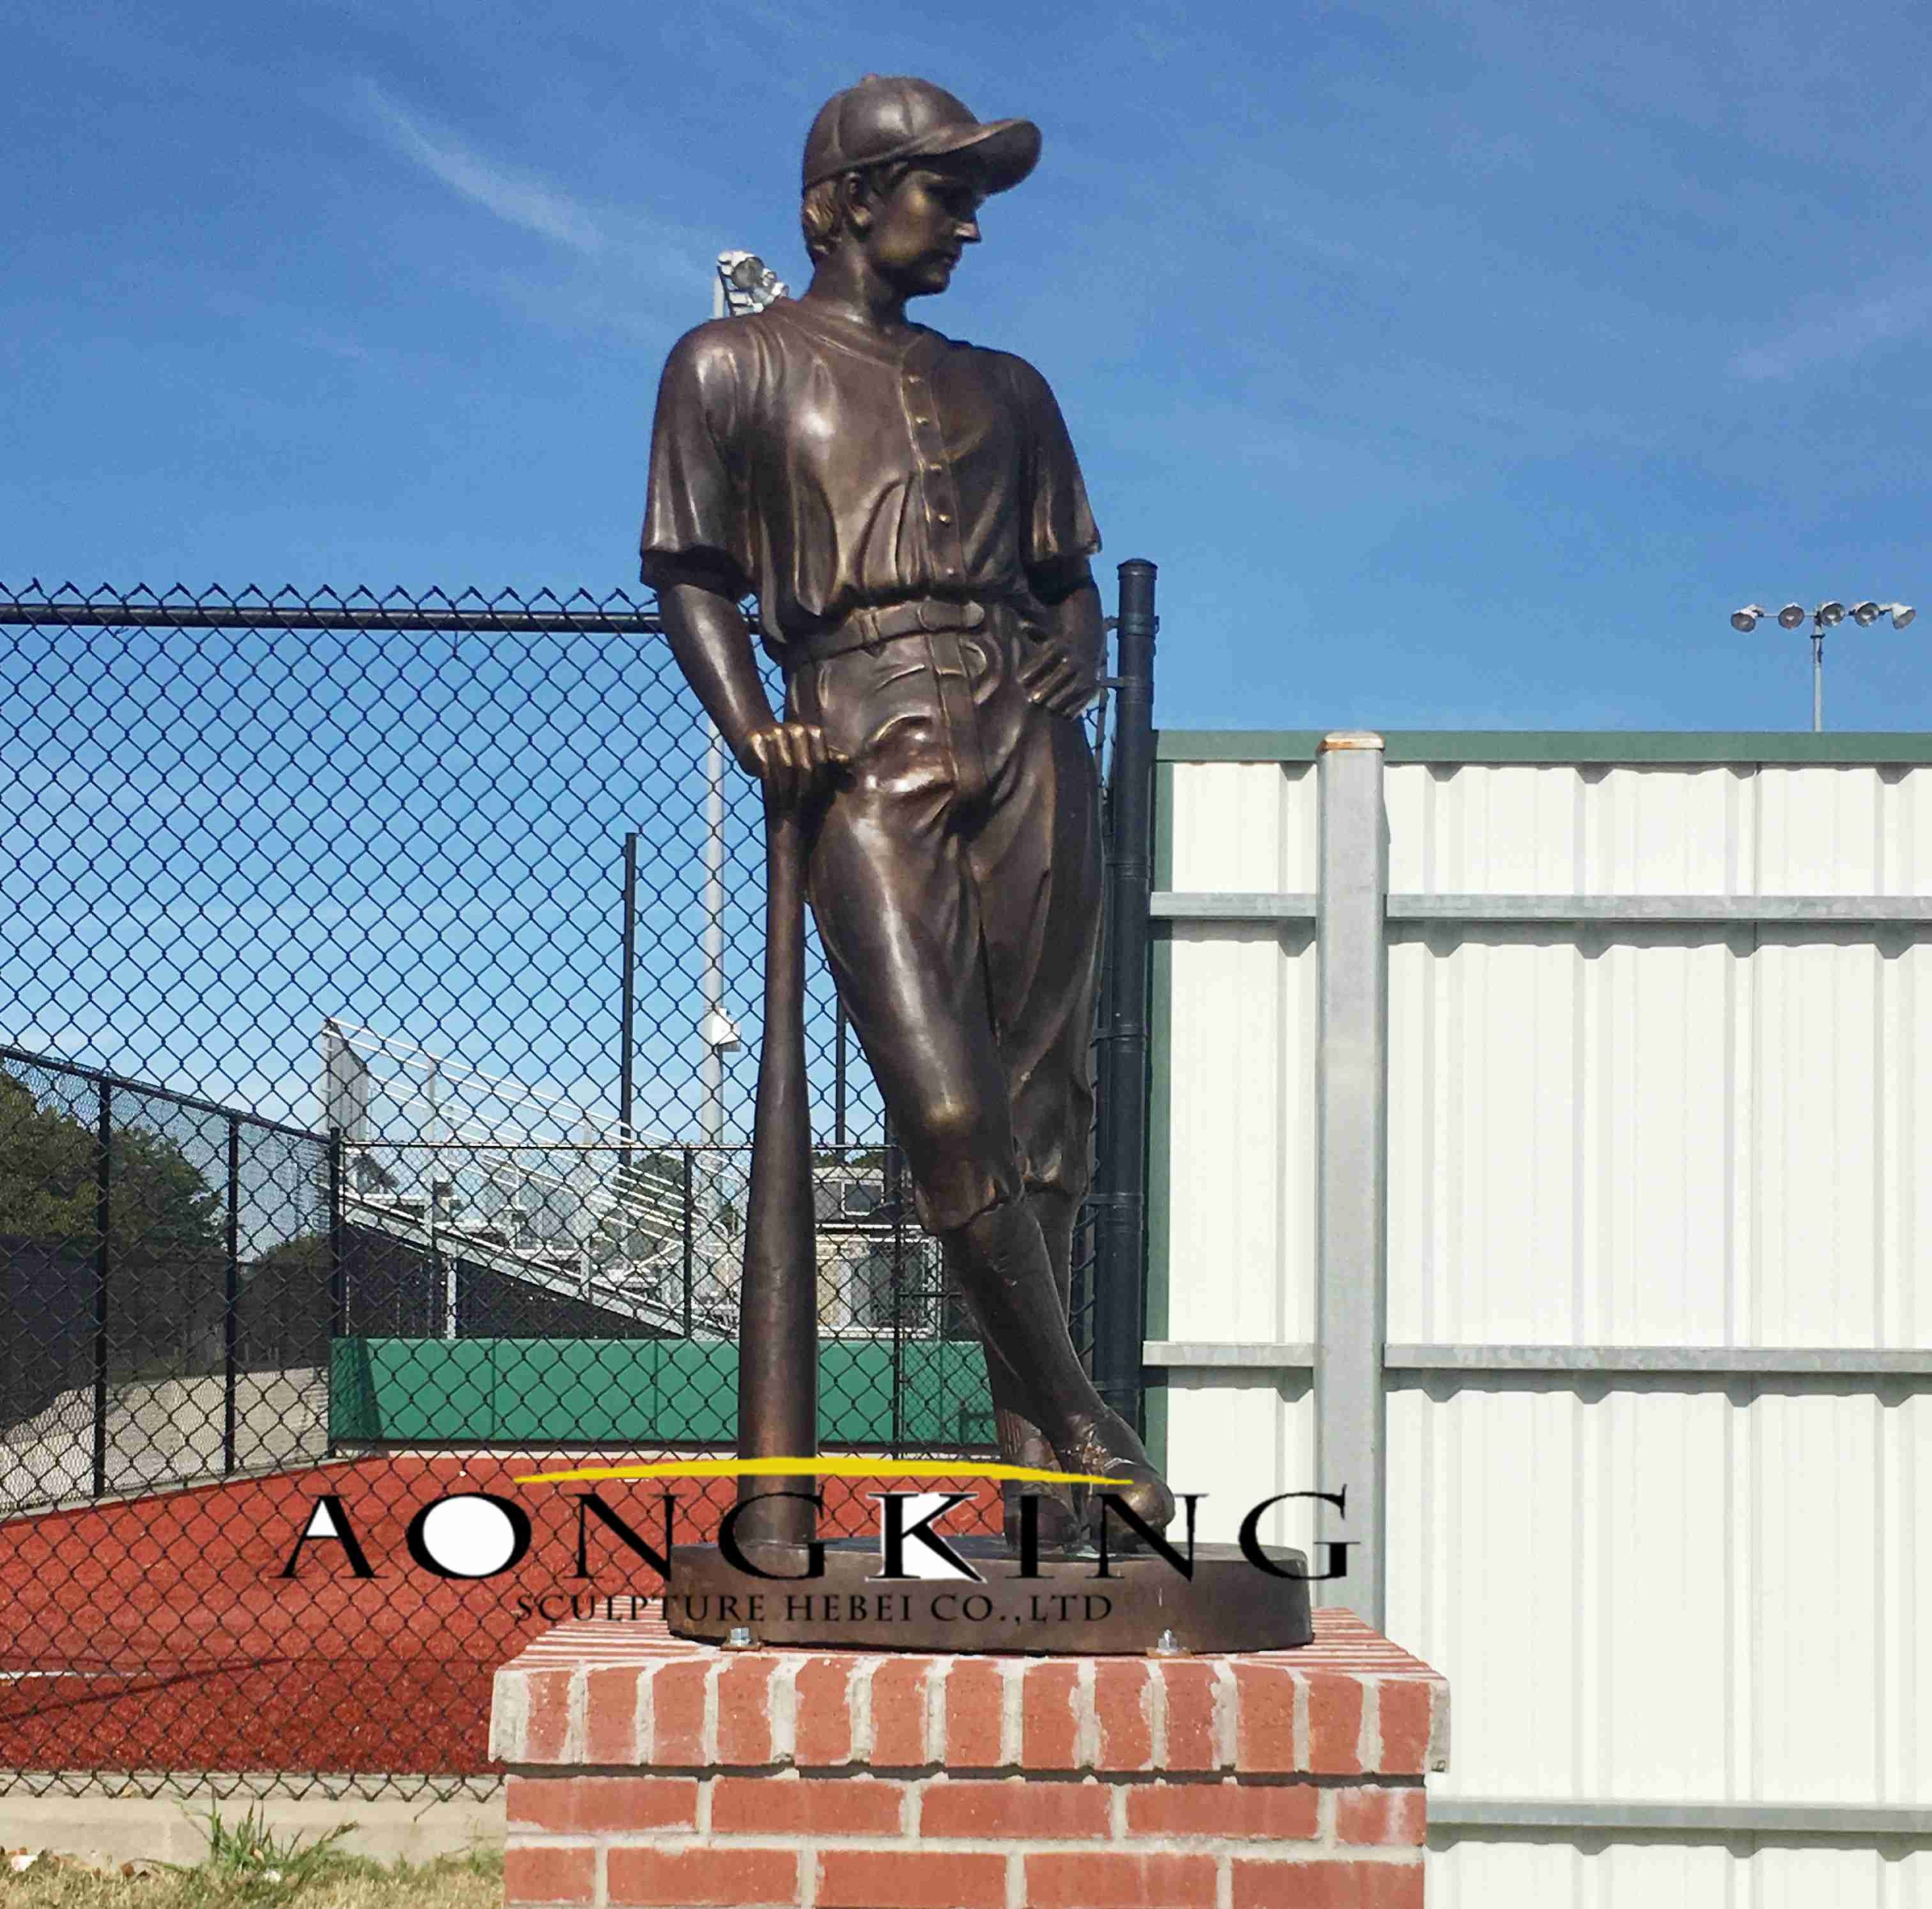 Life size bronze standing sportman statue